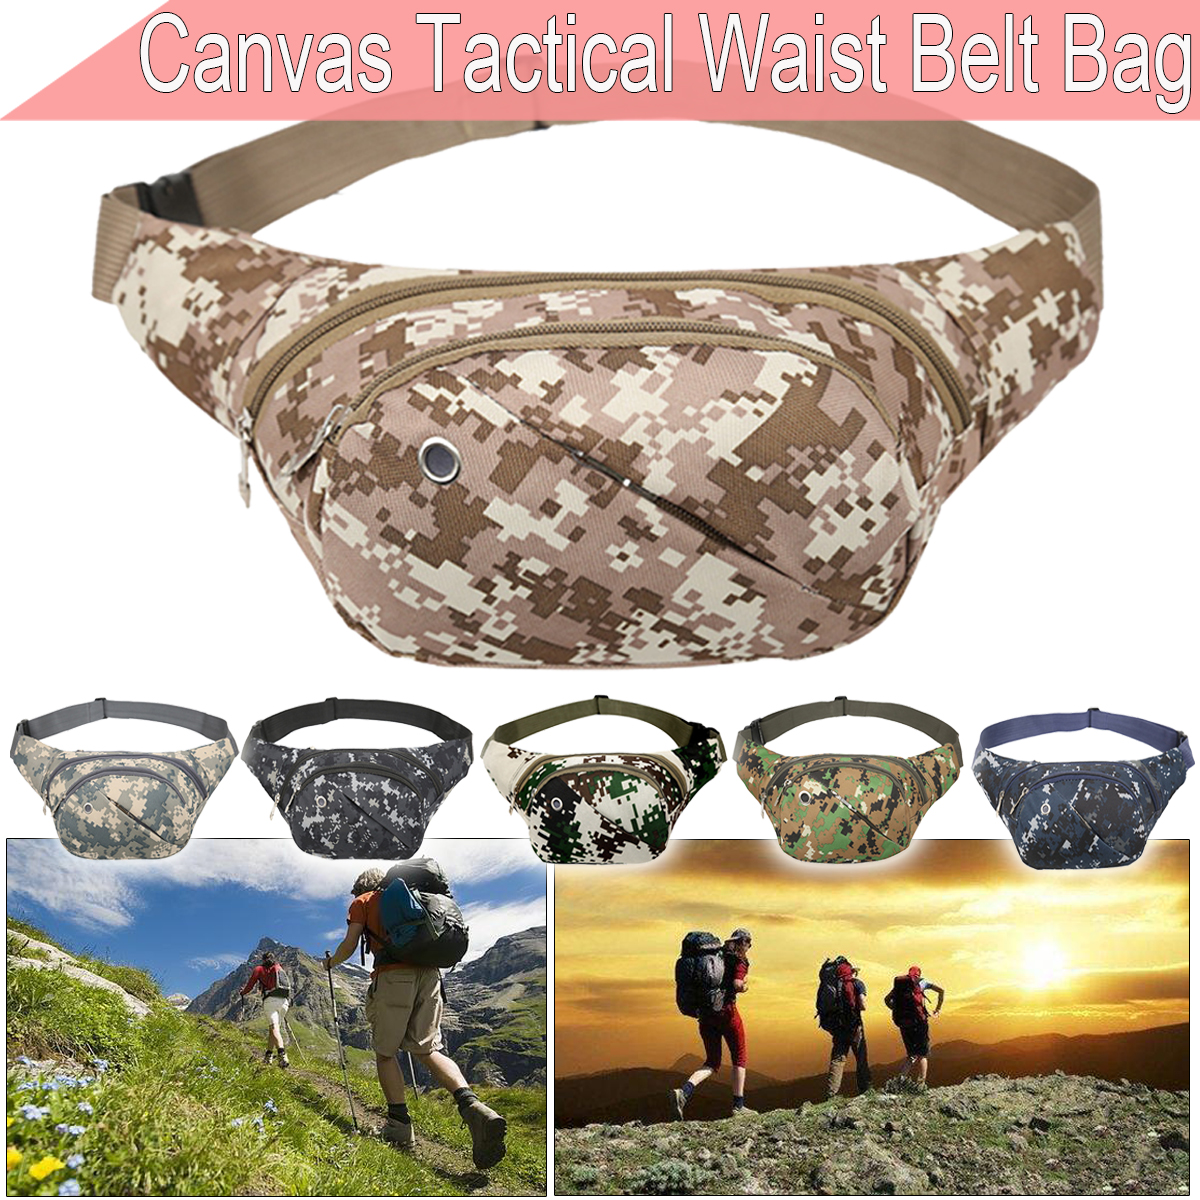 Mens-Tactical-Waist-Bag-Military-Canvas-Waist-Bag-Travel-Hiking-Storage-Bag-Camping-Belt-Bag-1589842-1